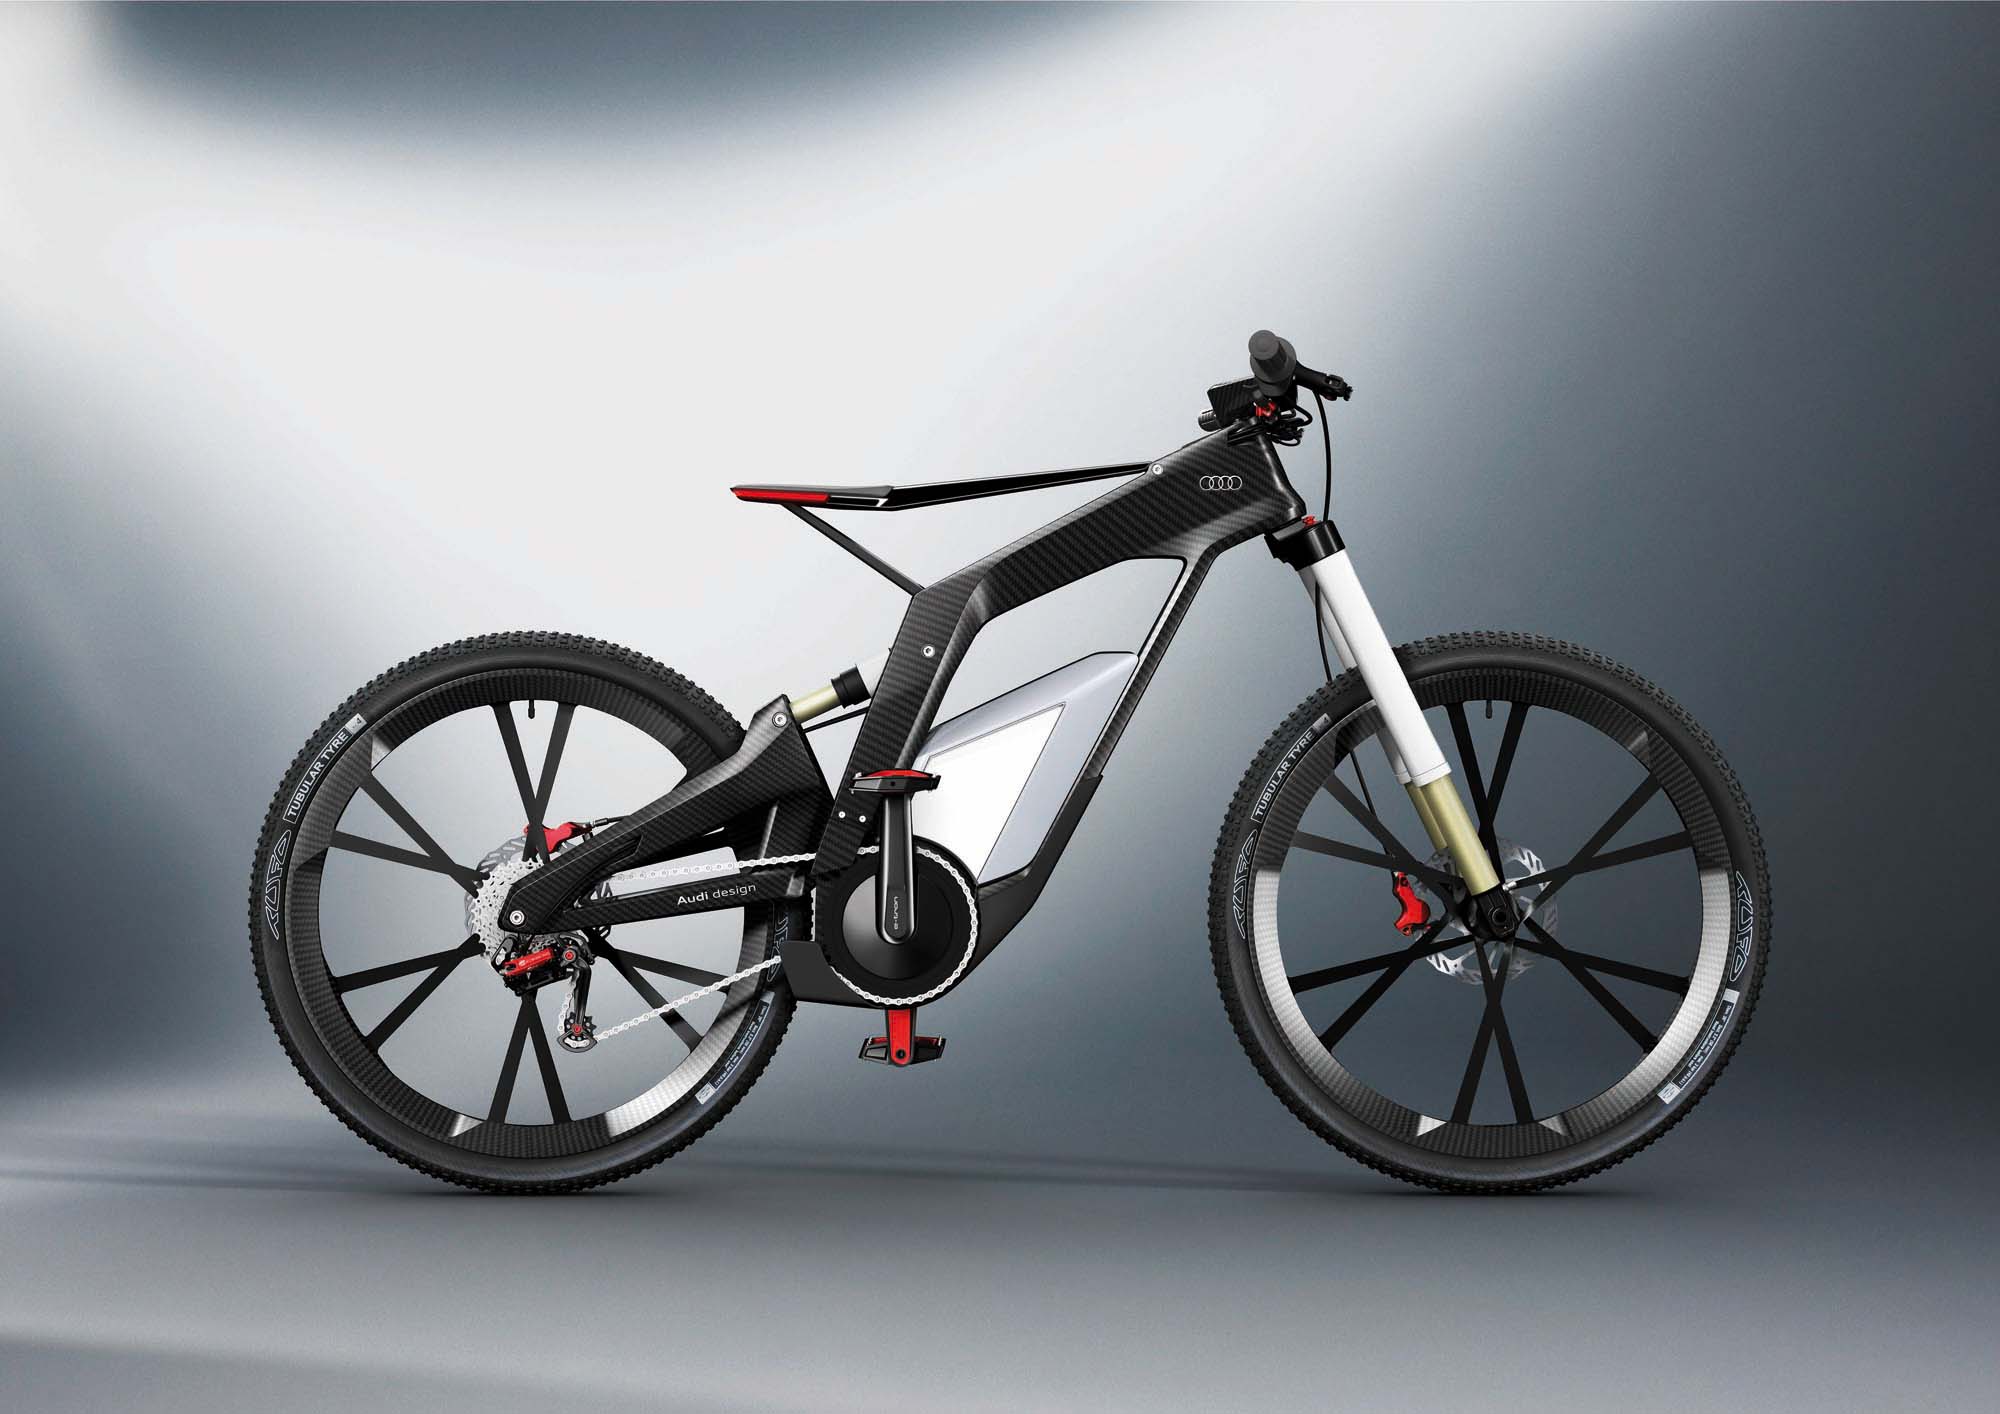 Audi e bike Wrthersee   More than an Electric Bicycle   Asphalt